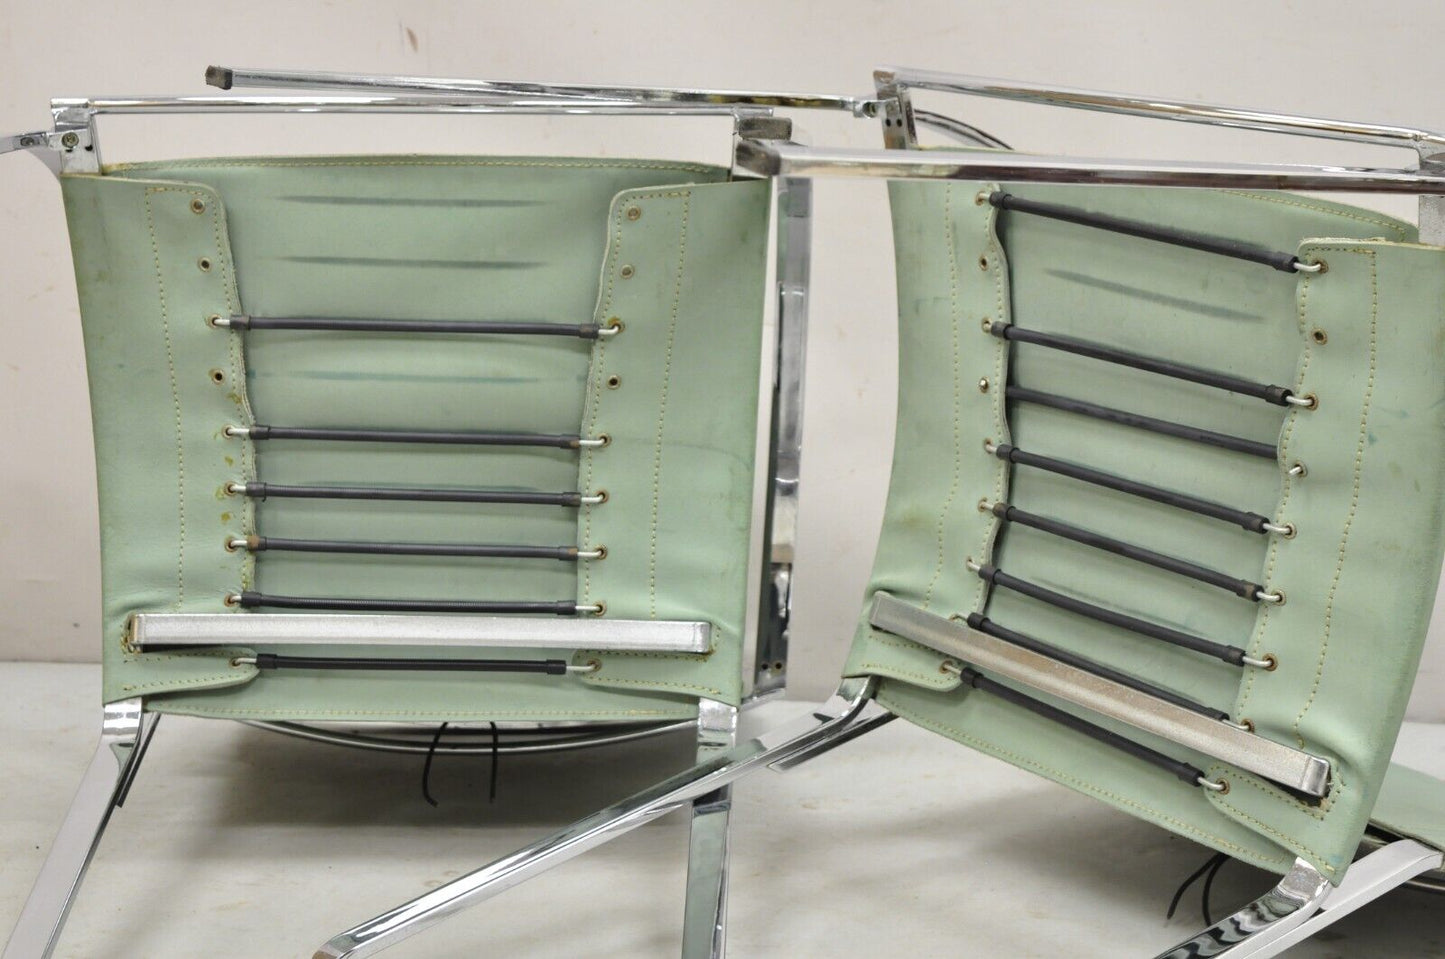 Italian Modern Naos Italy Teal Blue Leather Chrome "Corset" Arm Chairs - a Pair